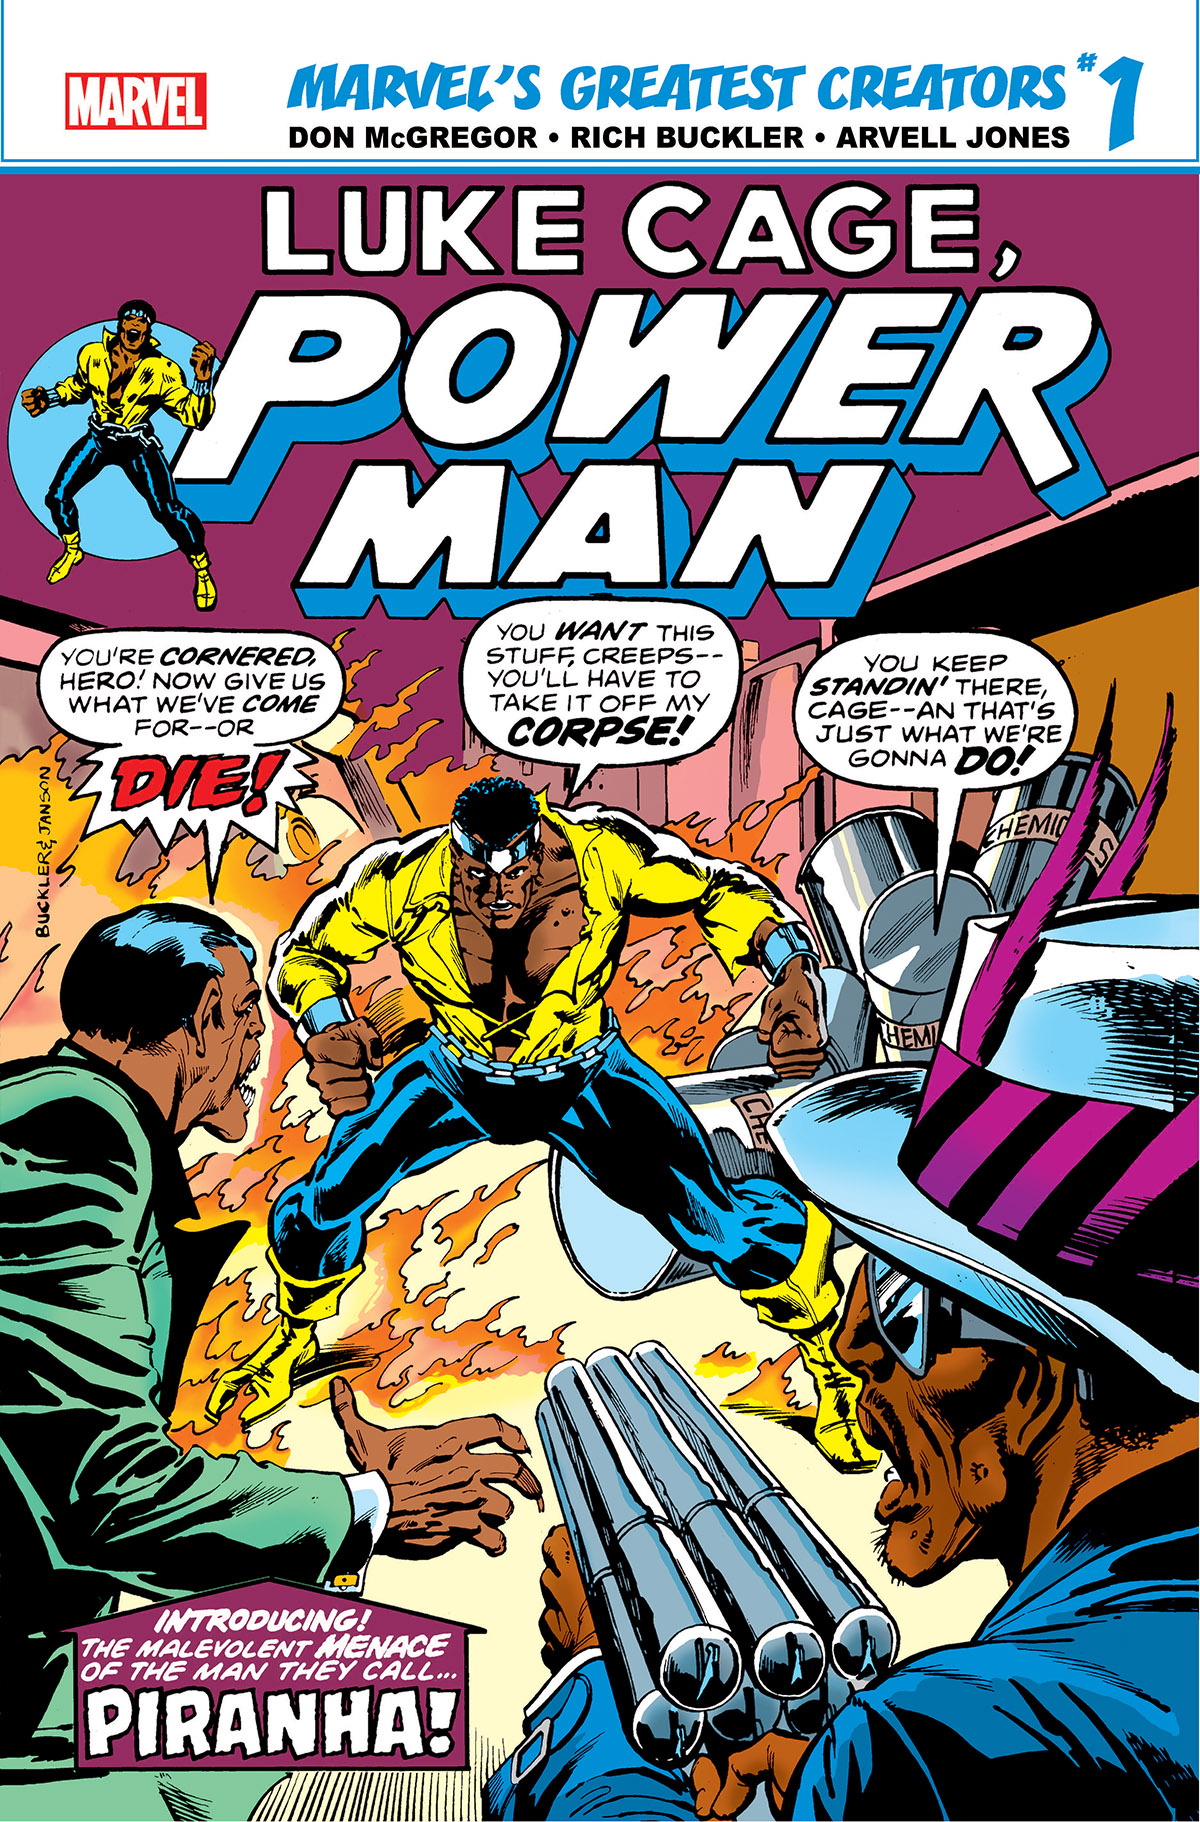 Marvel's Greatest Creators: Luke Cage, Power Man - Piranha! (2019) #1 |  Comic Issues | Marvel